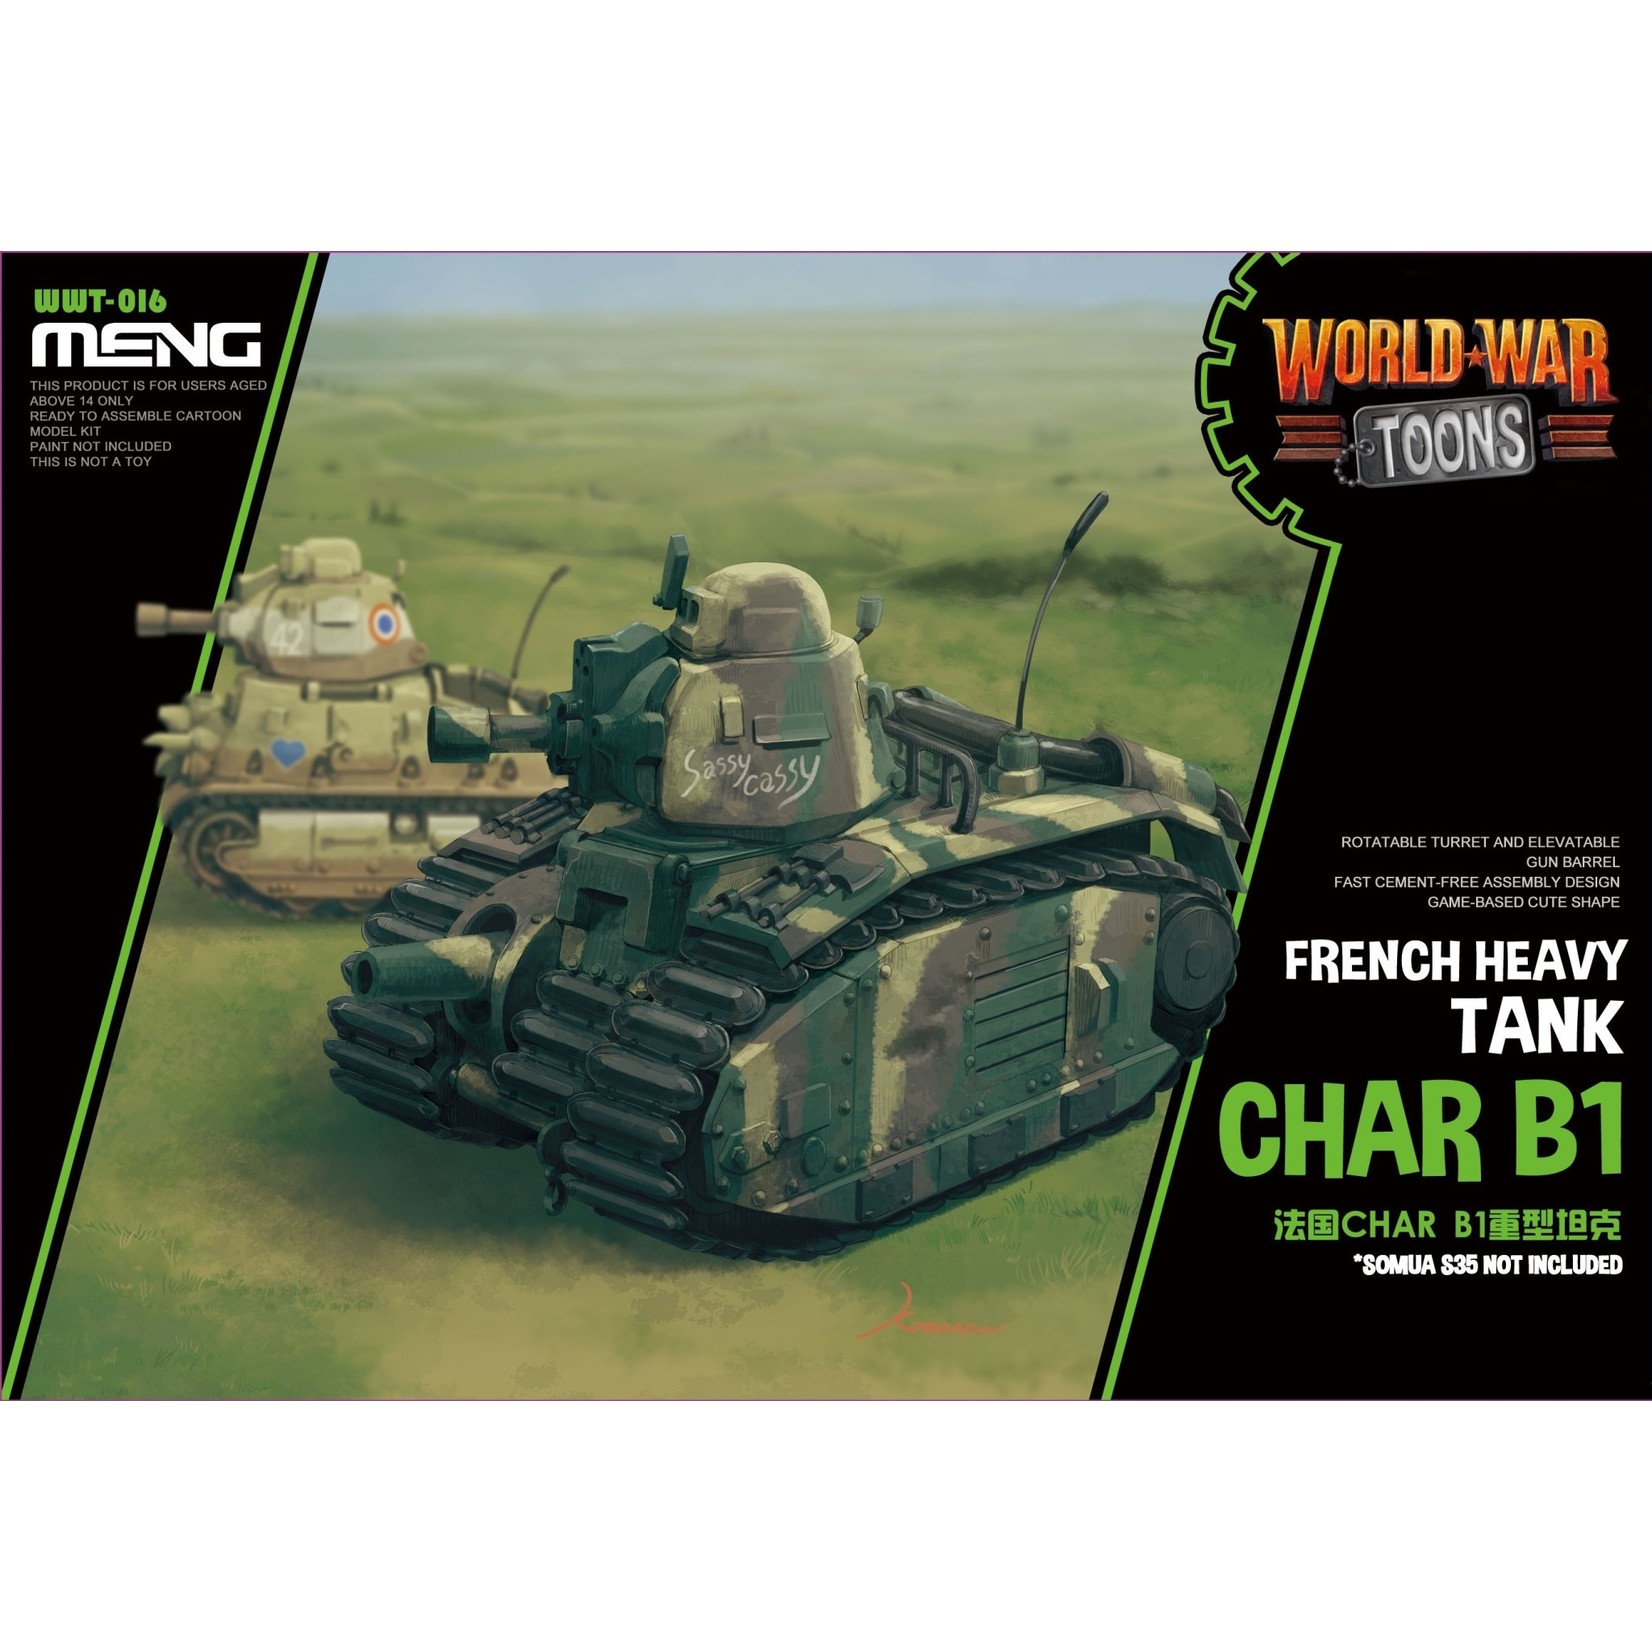 MENG MENGWWT016 French Heavy Tank Char B1 World War Toons